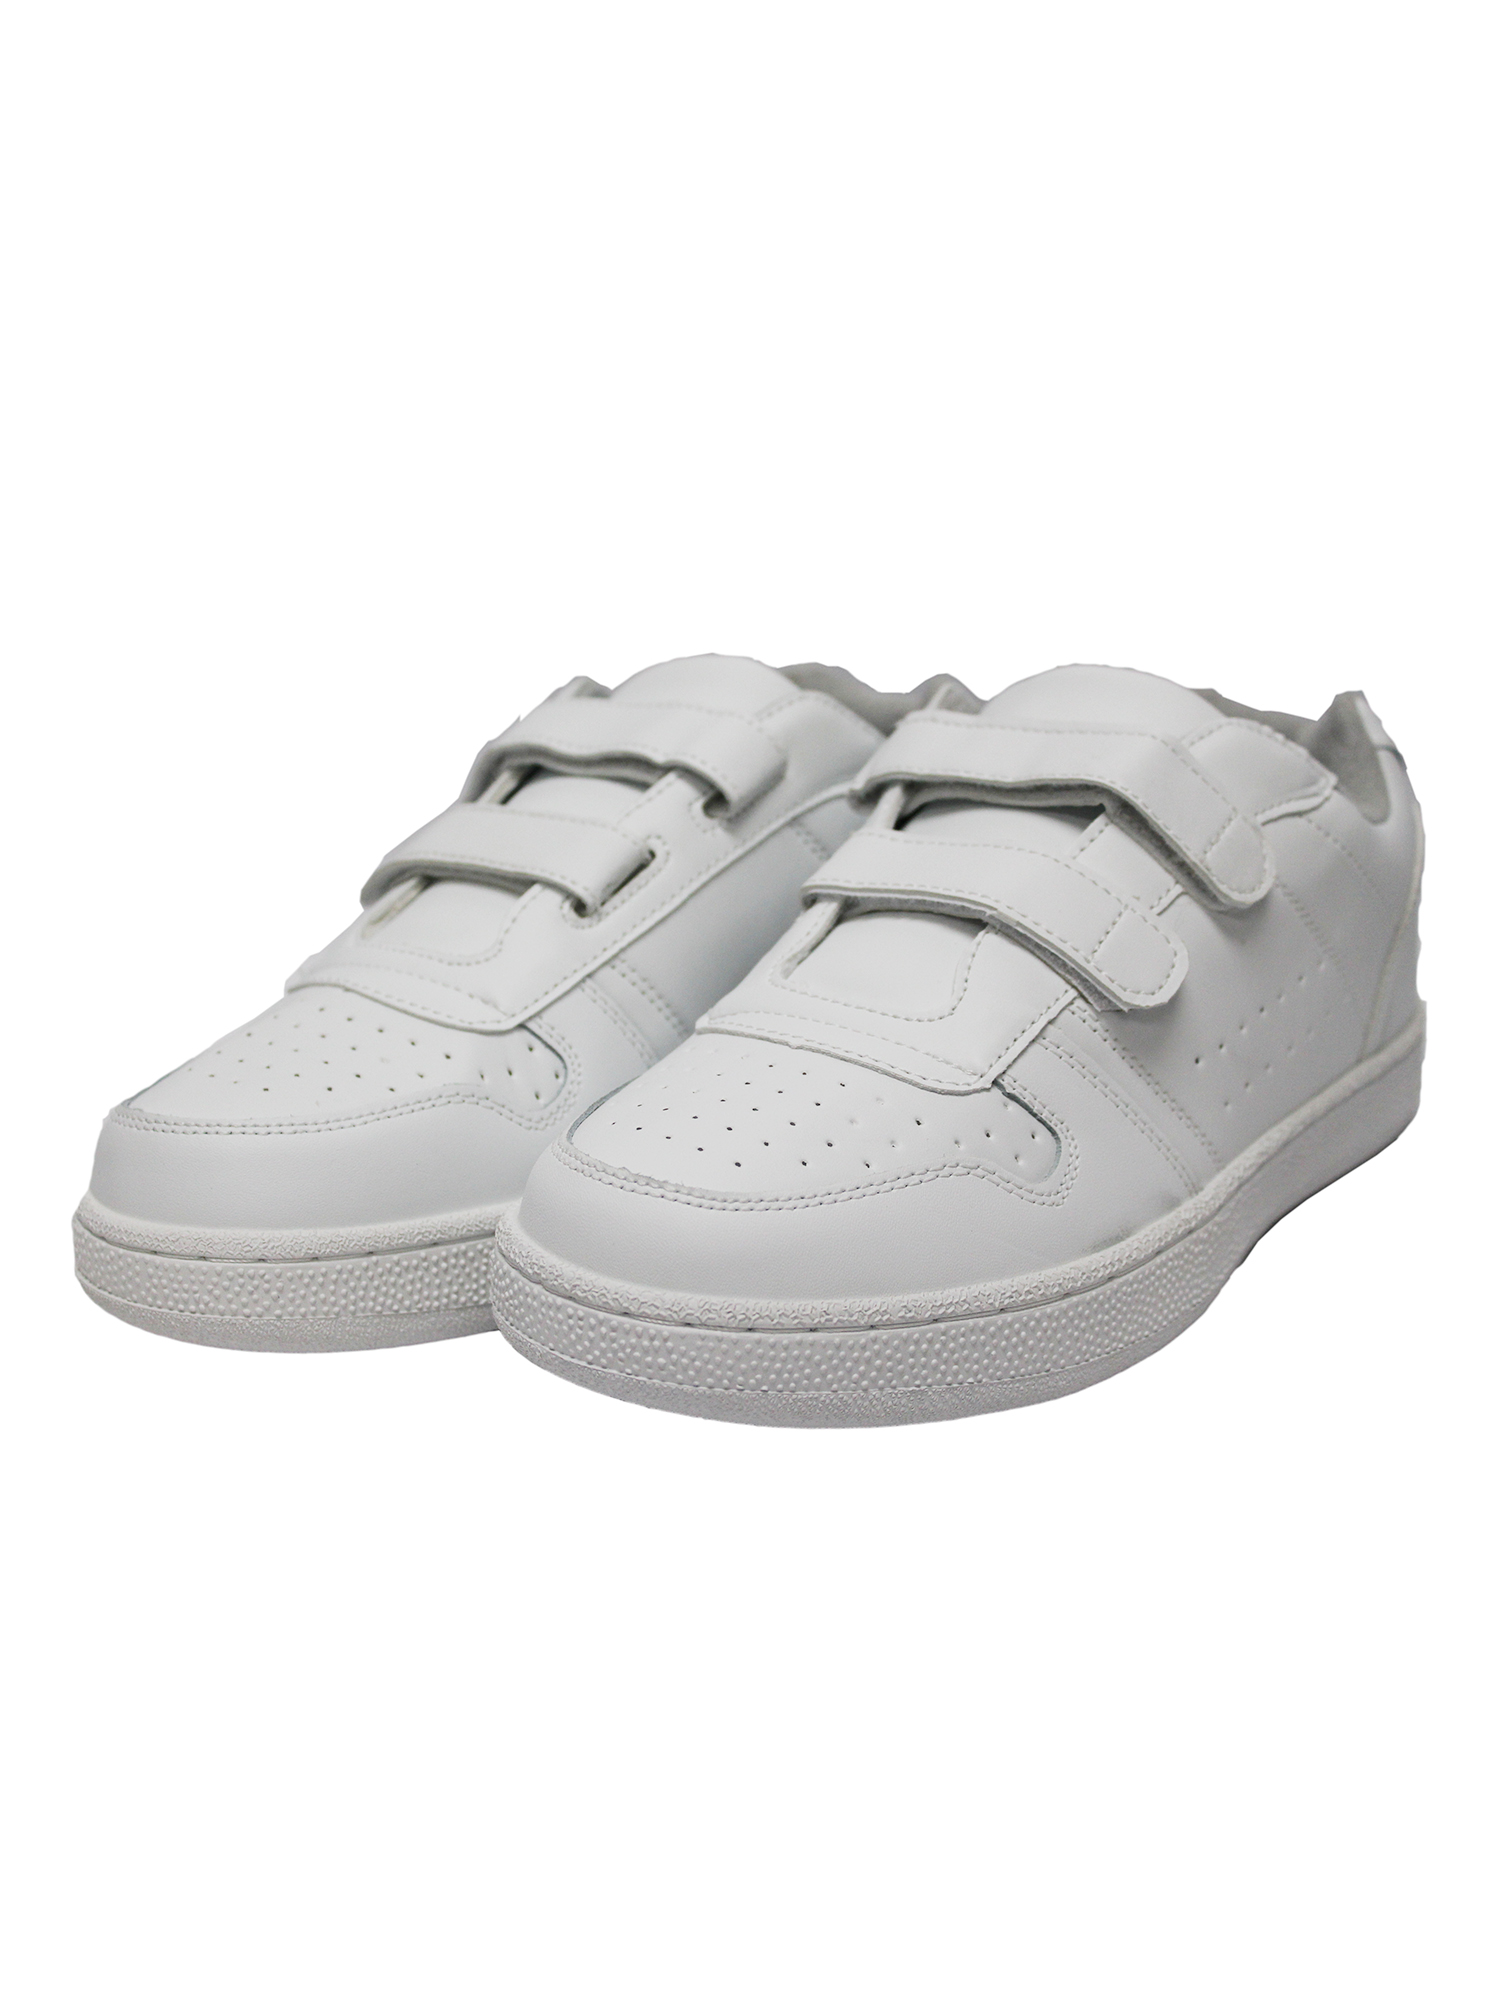 Tanleewa Men's Leather Strap Sneakers Lightweight Hook and Loop Walking Shoe Size 10.5 Adult Male - image 2 of 5